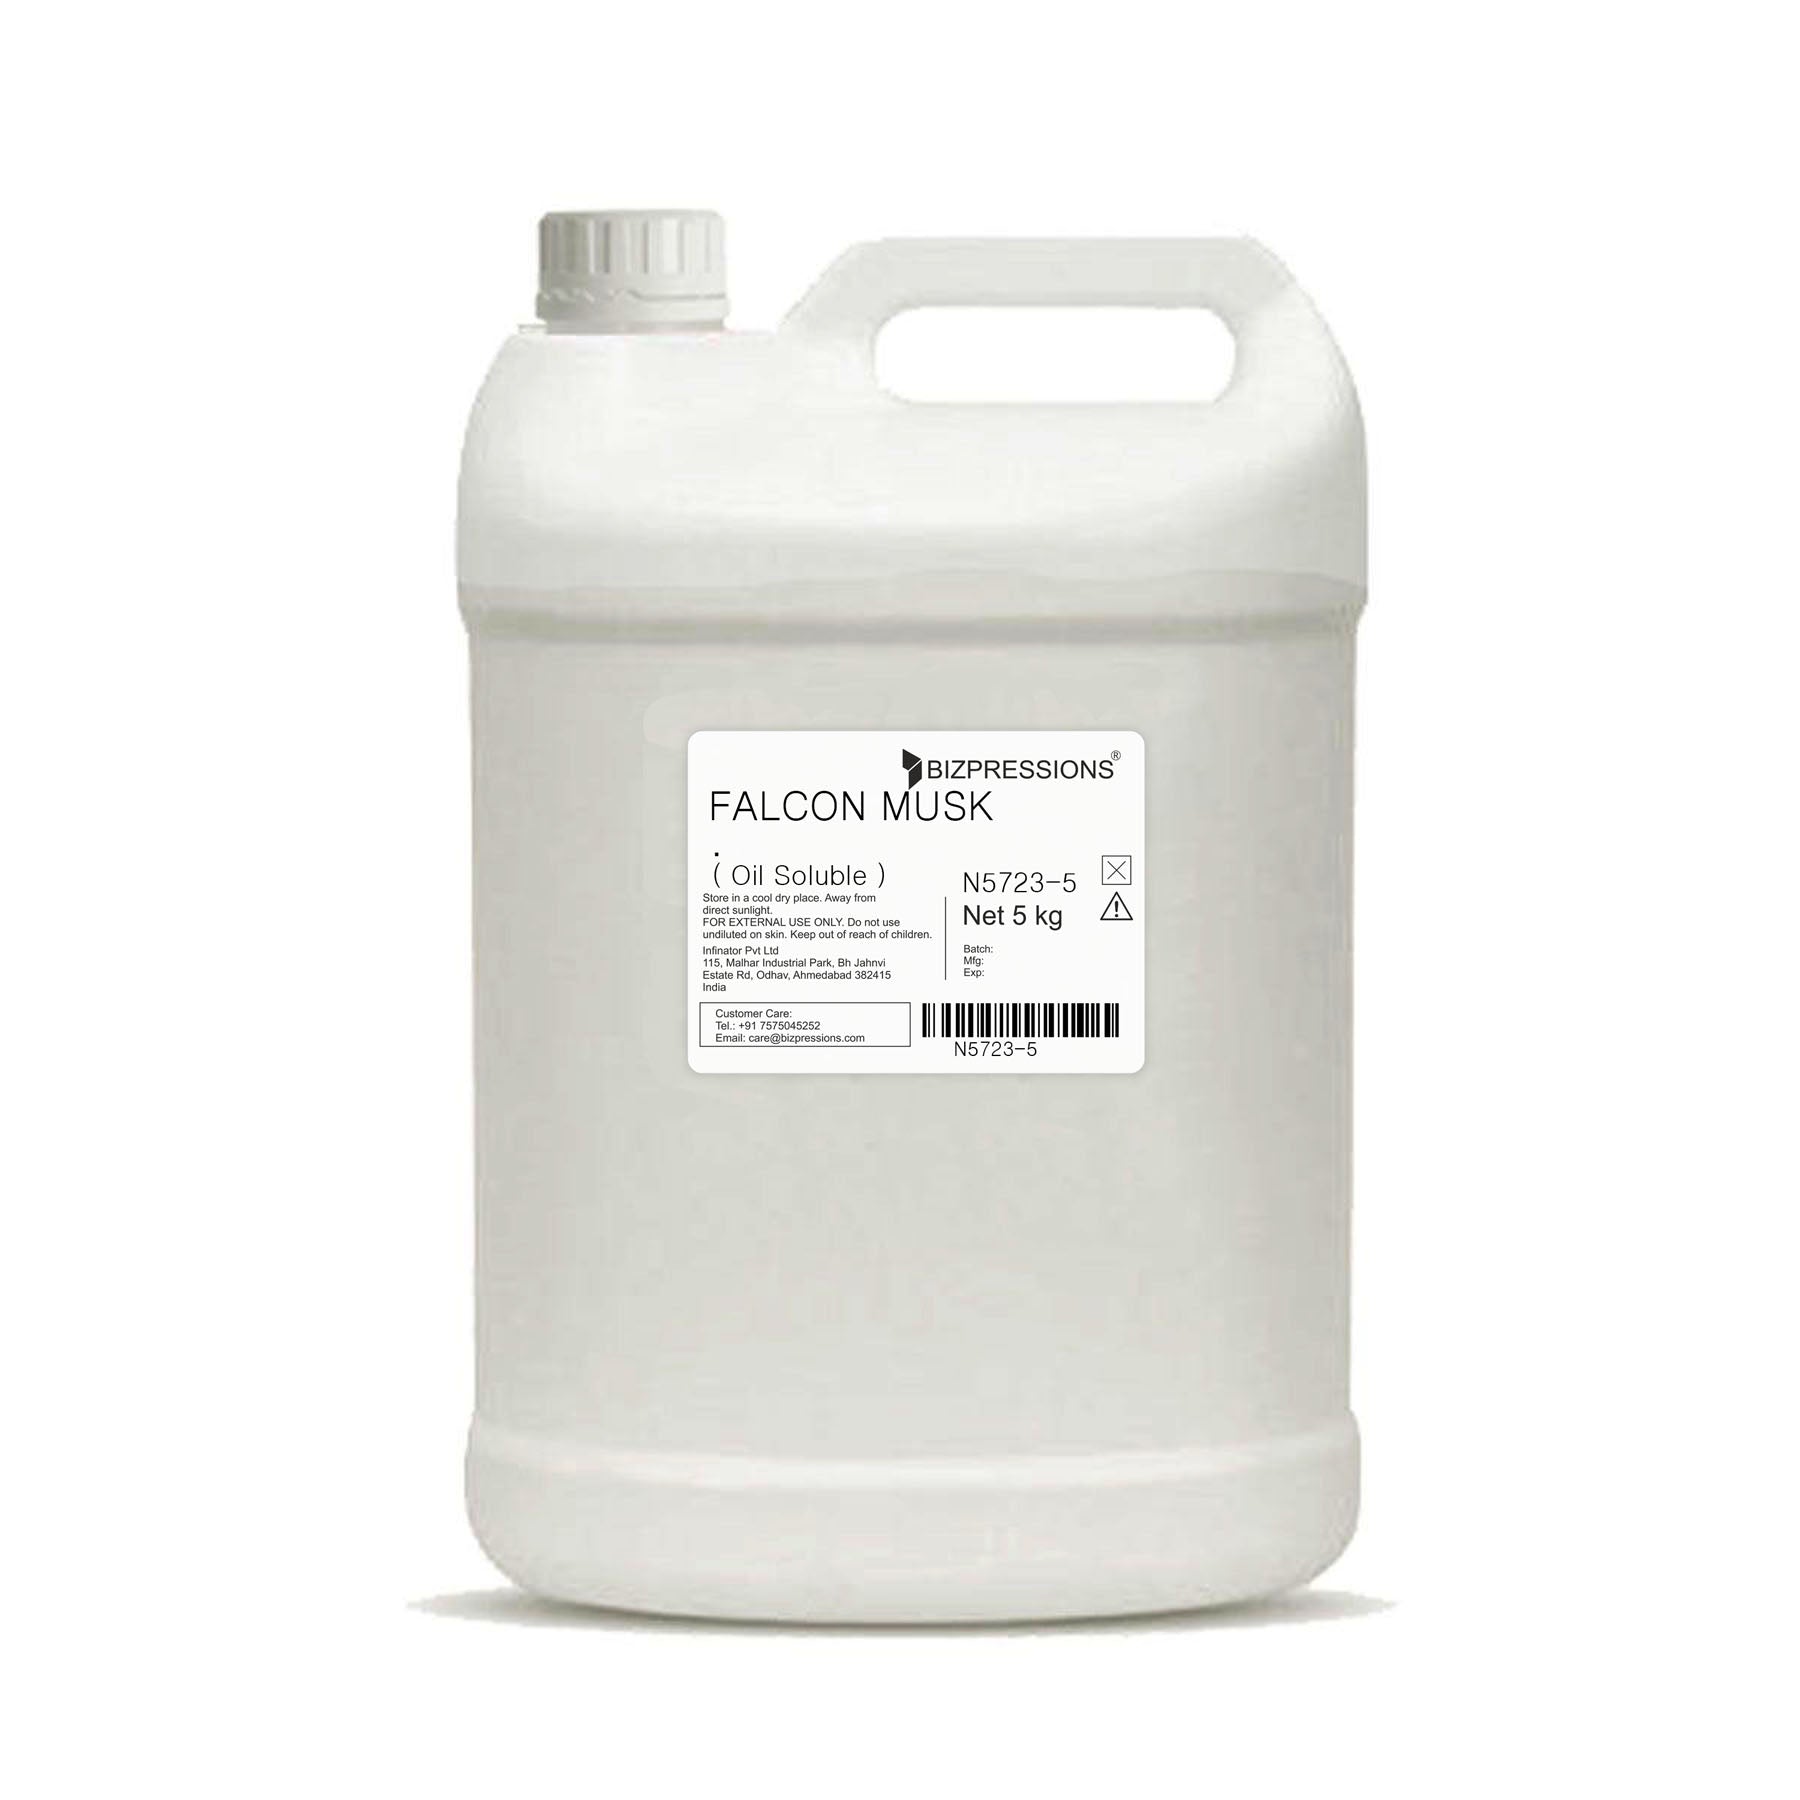 FALCON MUSK - Fragrance ( Oil Soluble ) - 5 kg